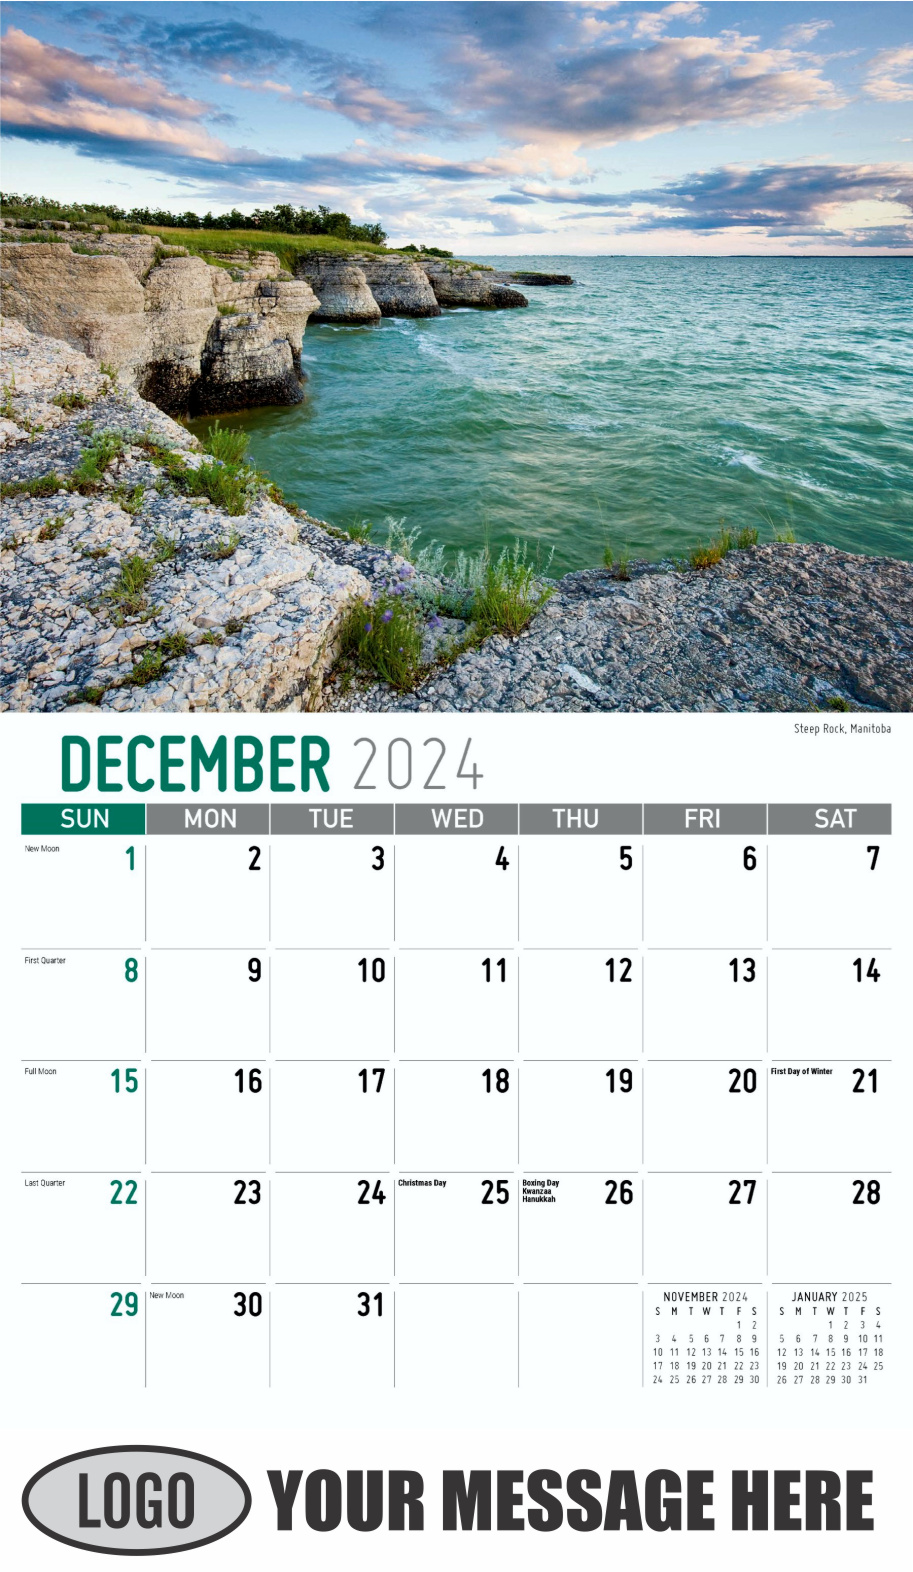 Scenes of Western Canada 2024 Business Promotional Wall Calendar - December